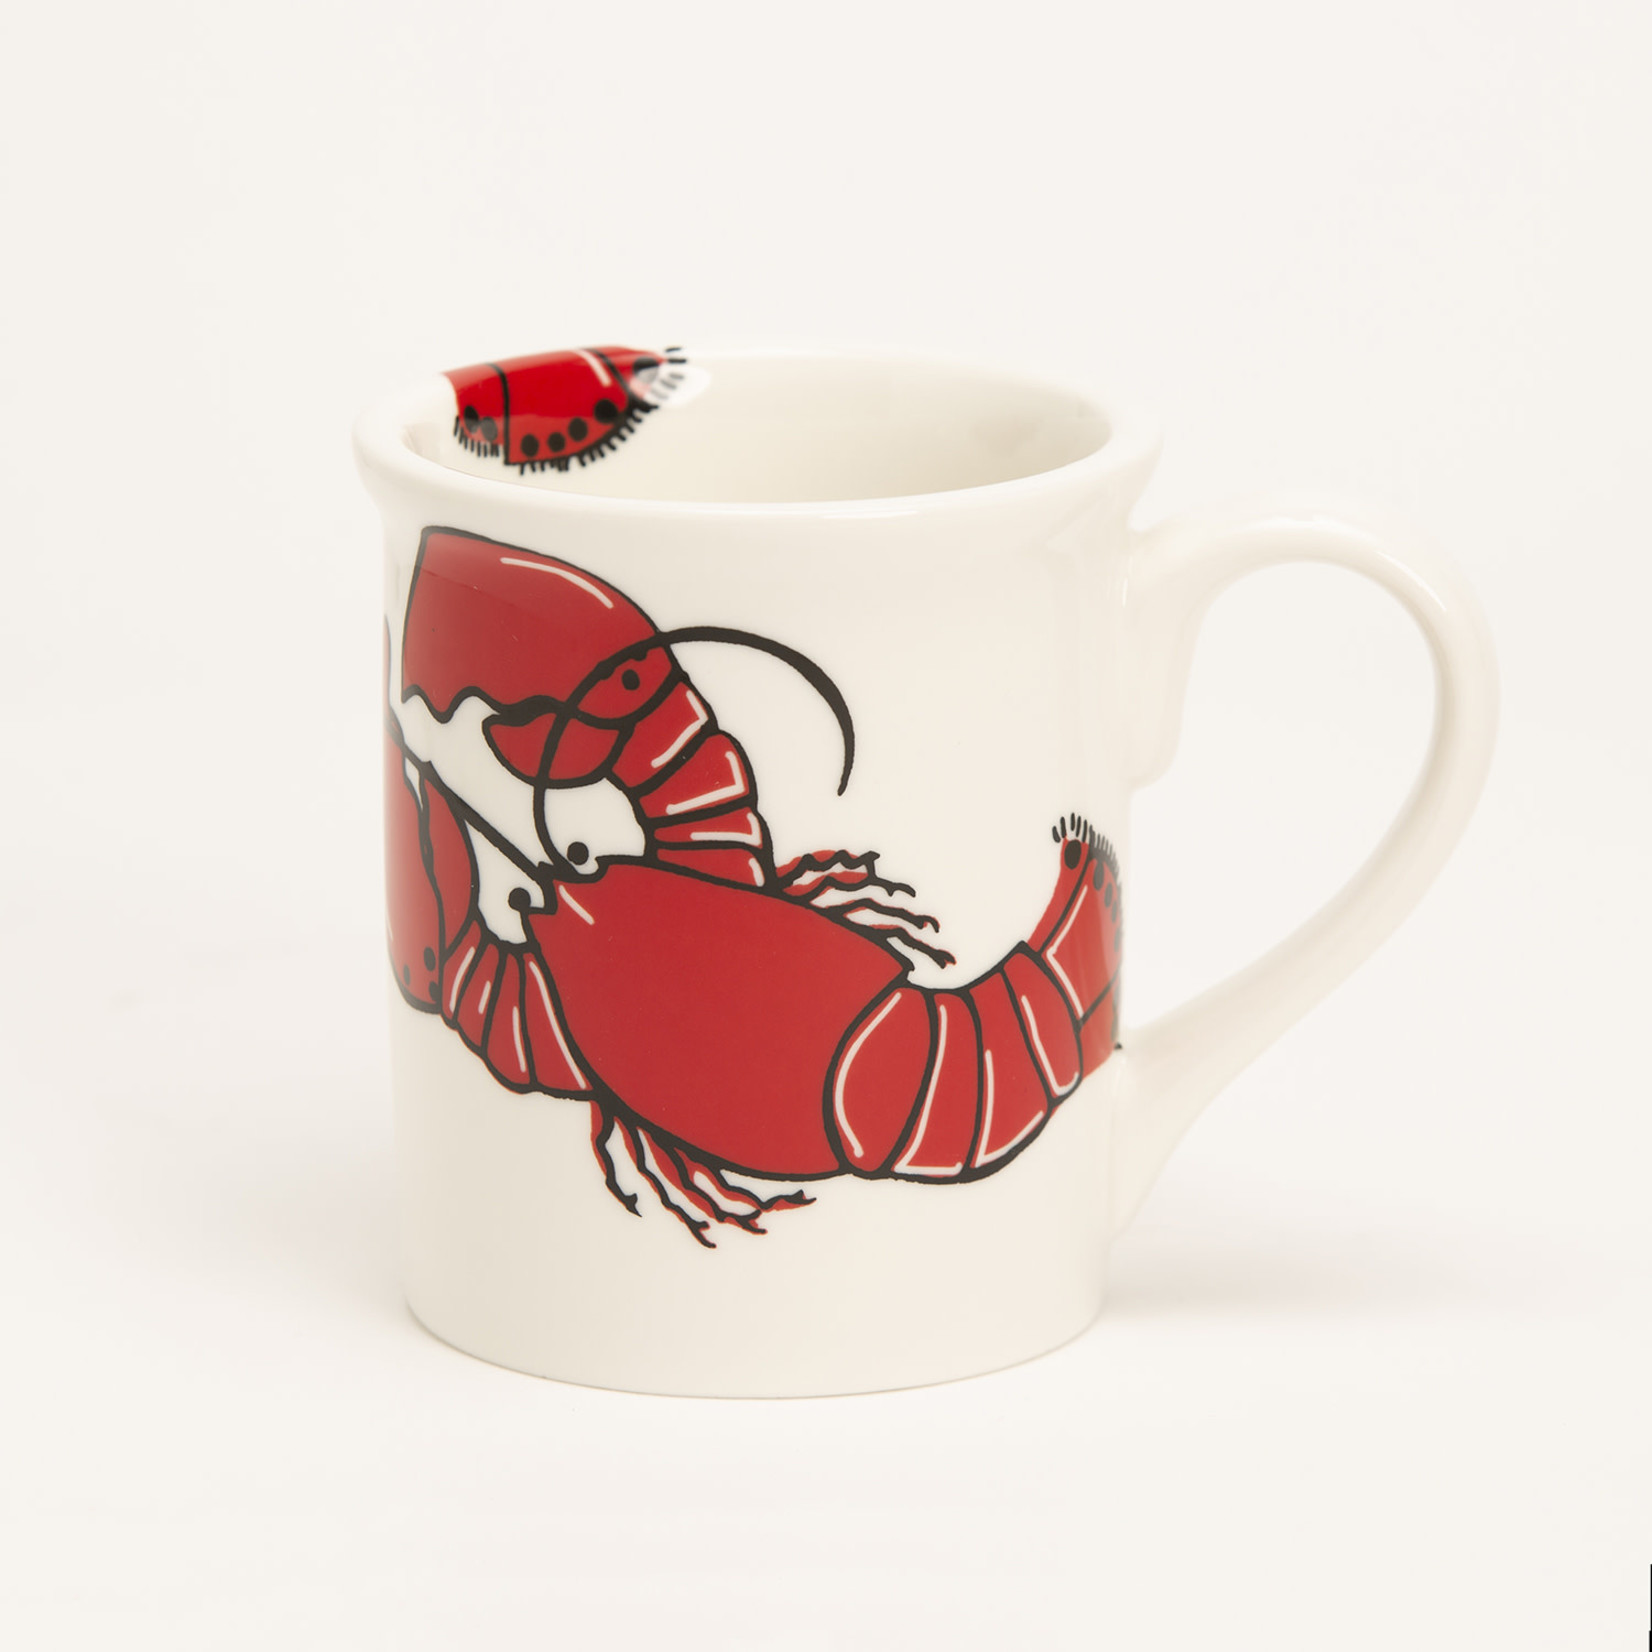 4.25" Mug - Lobster